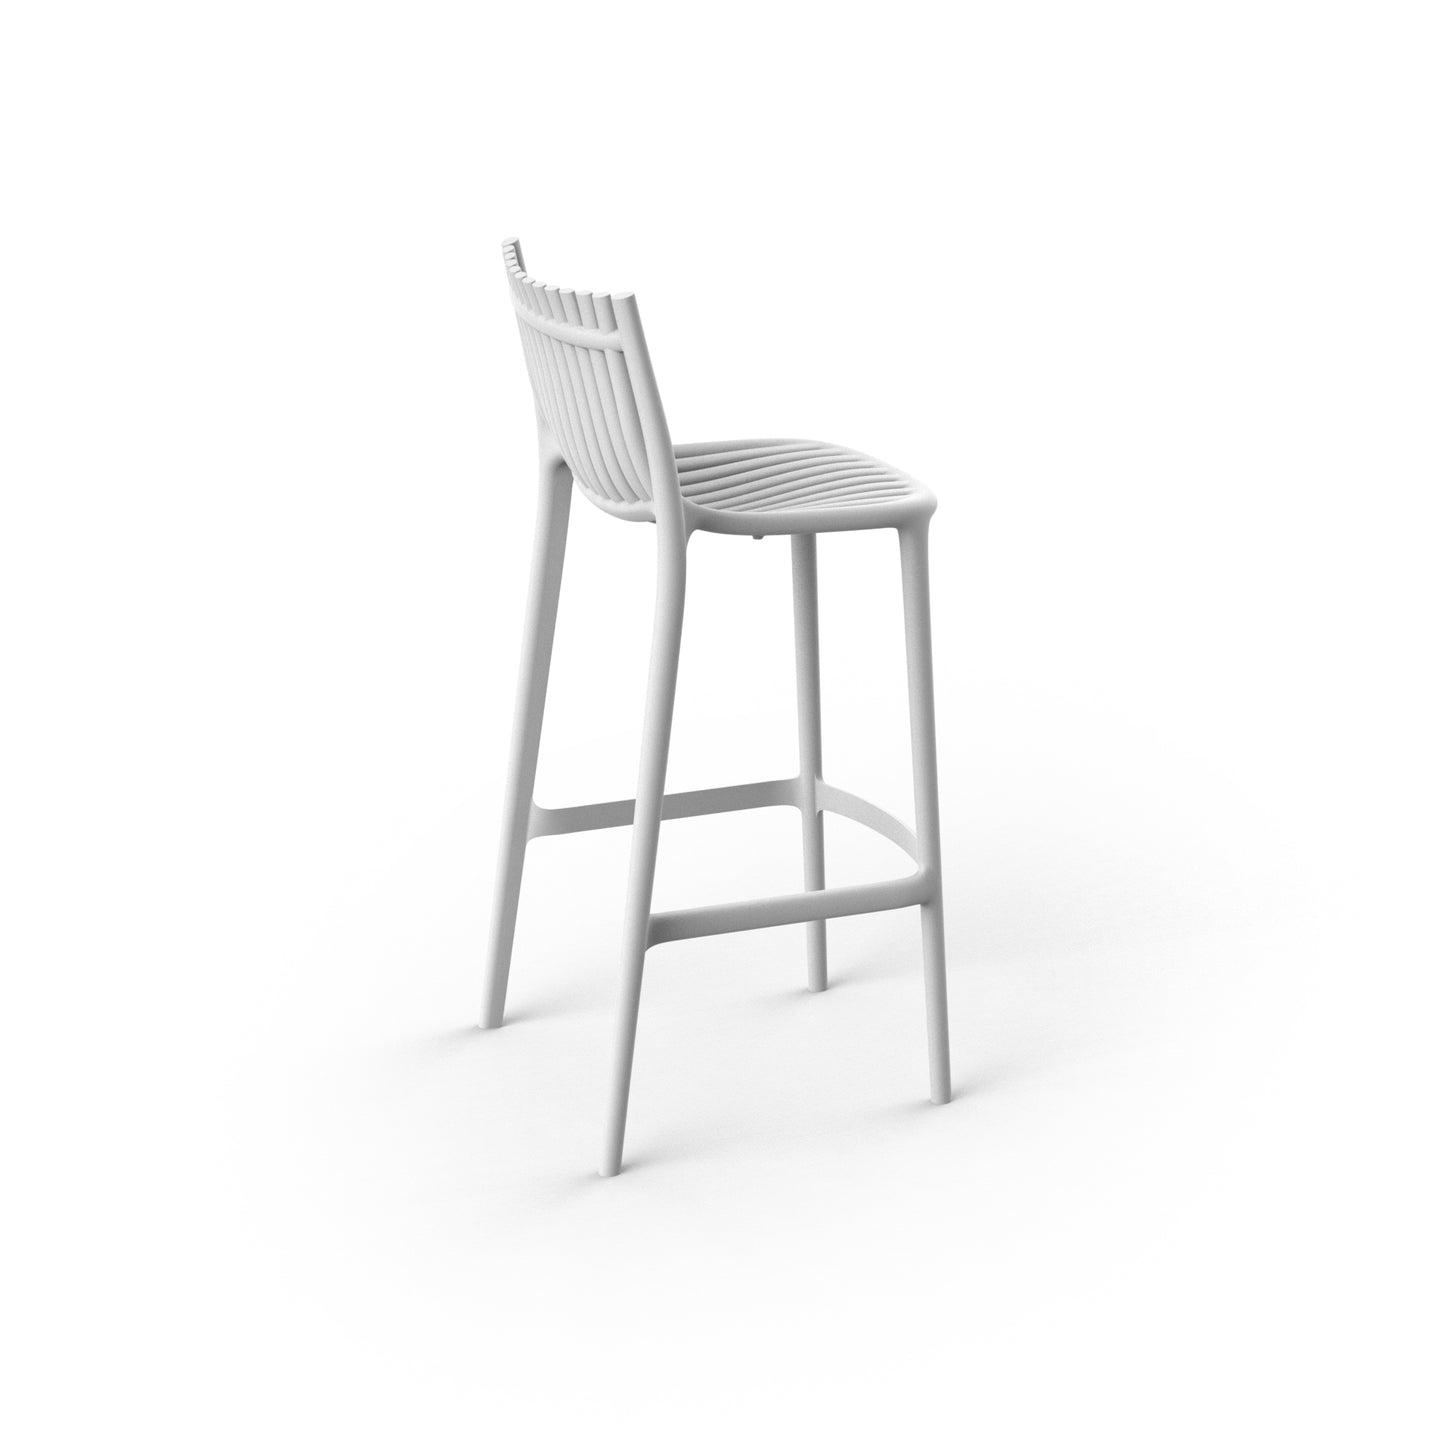 Ibiza bar stool